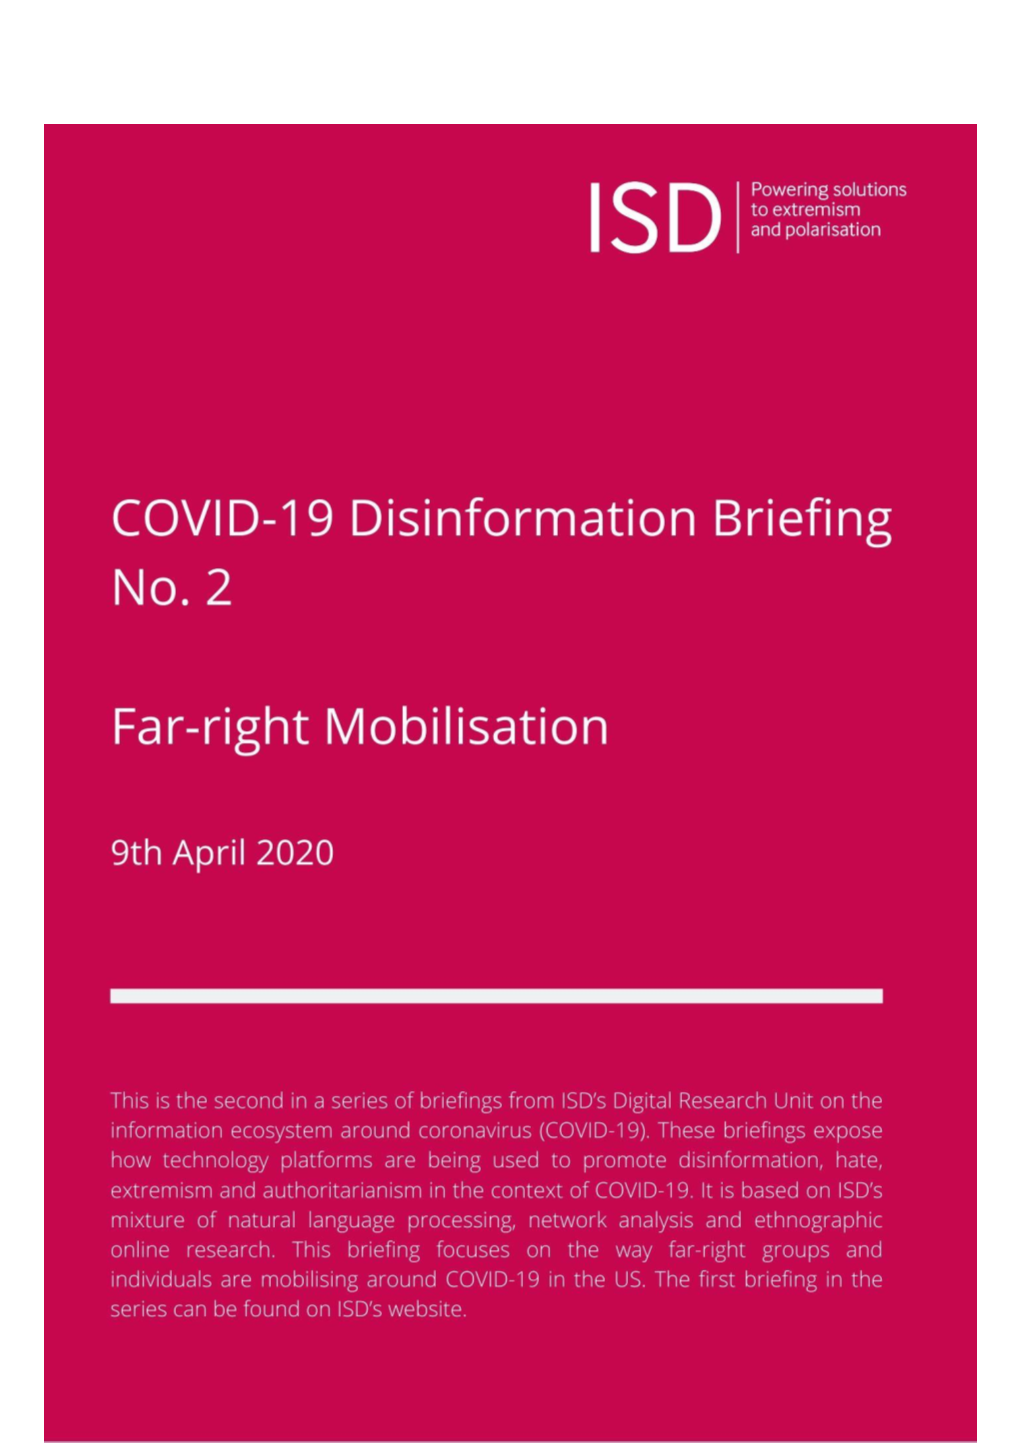 Covid-19 Disinformation Briefing No. 2 Far-Right Mobilisation